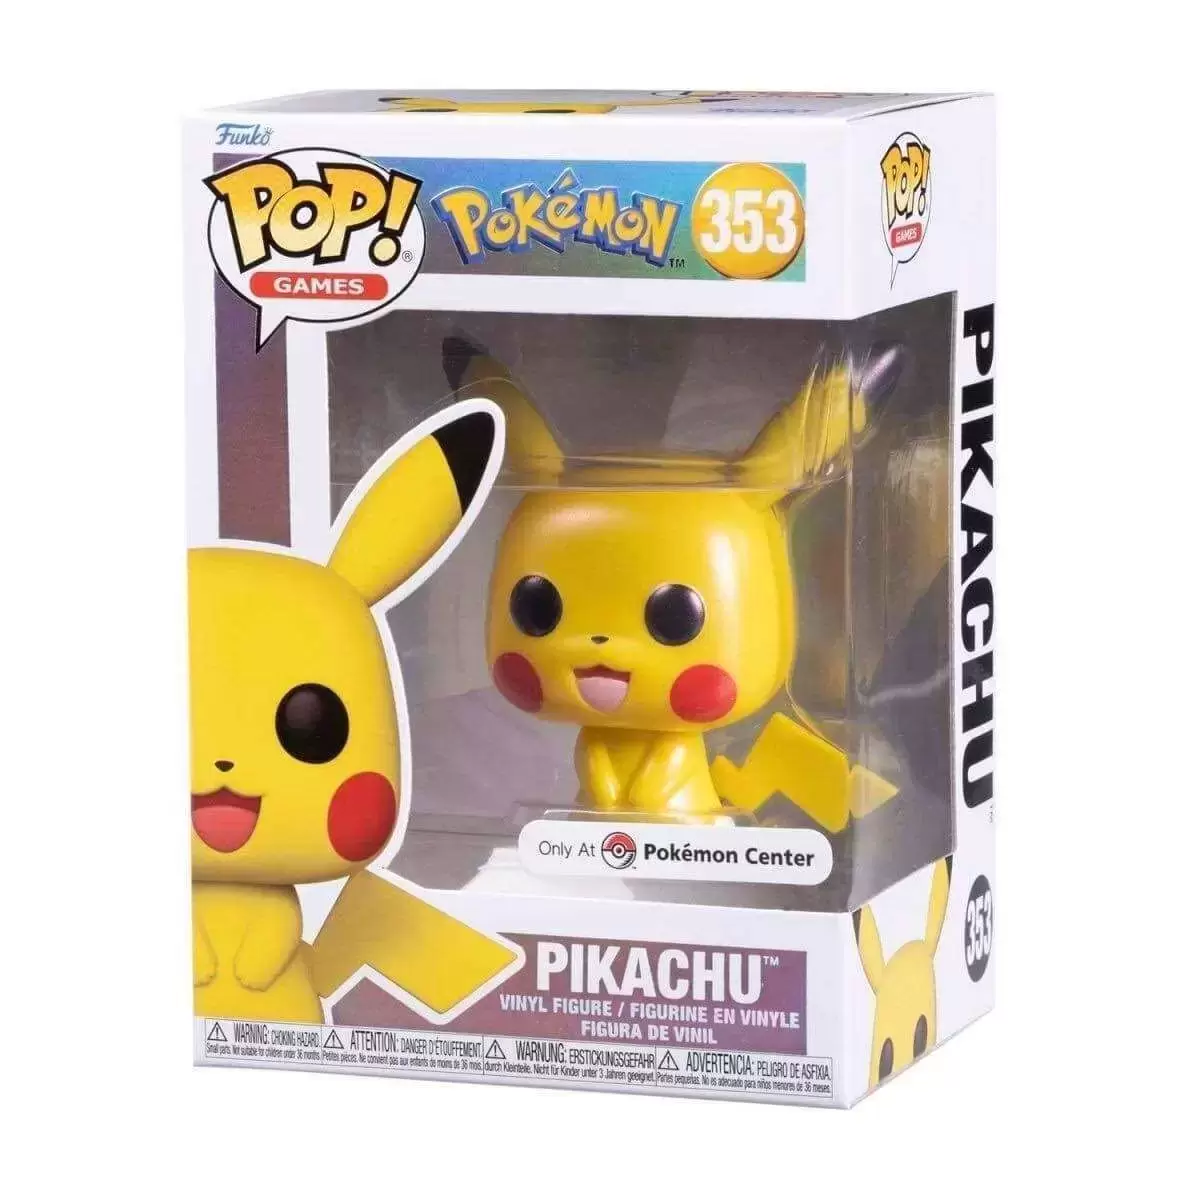 Pokemon - Pikachu Pearlescent - POP! Games action figure 353